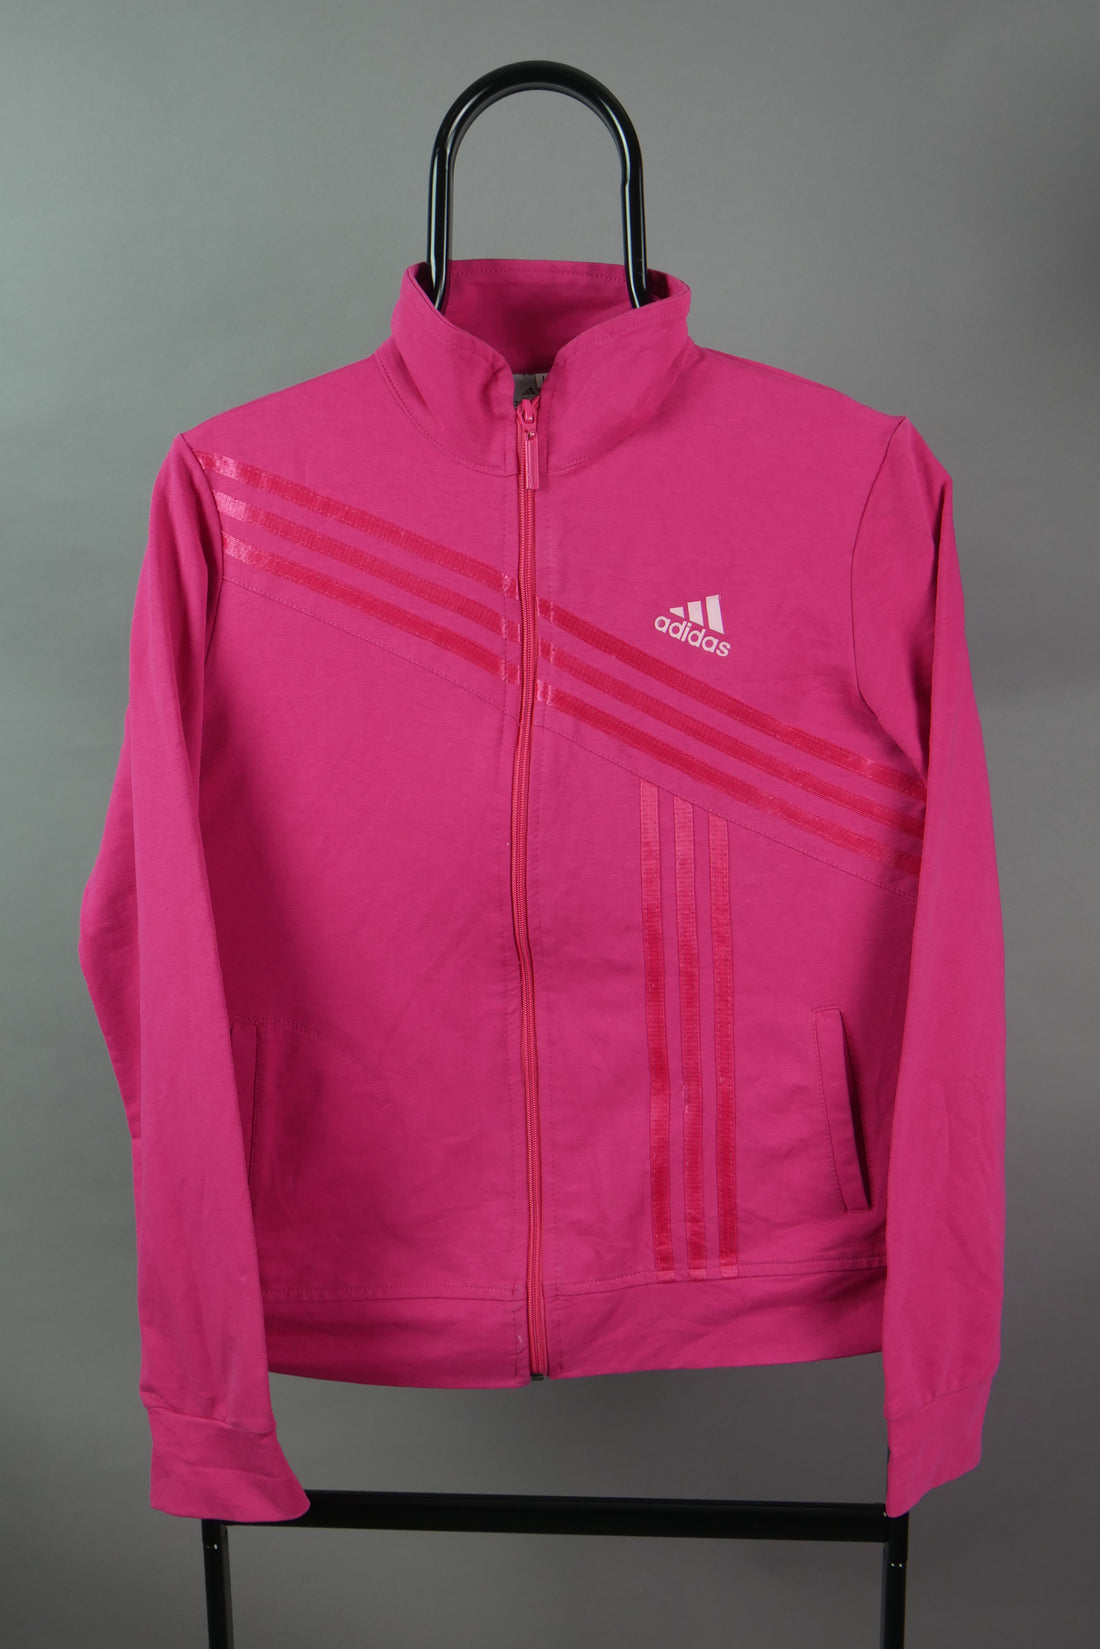 The Adidas Bootleg Hot Pink Zip Up Sweatshirt (Women's M)